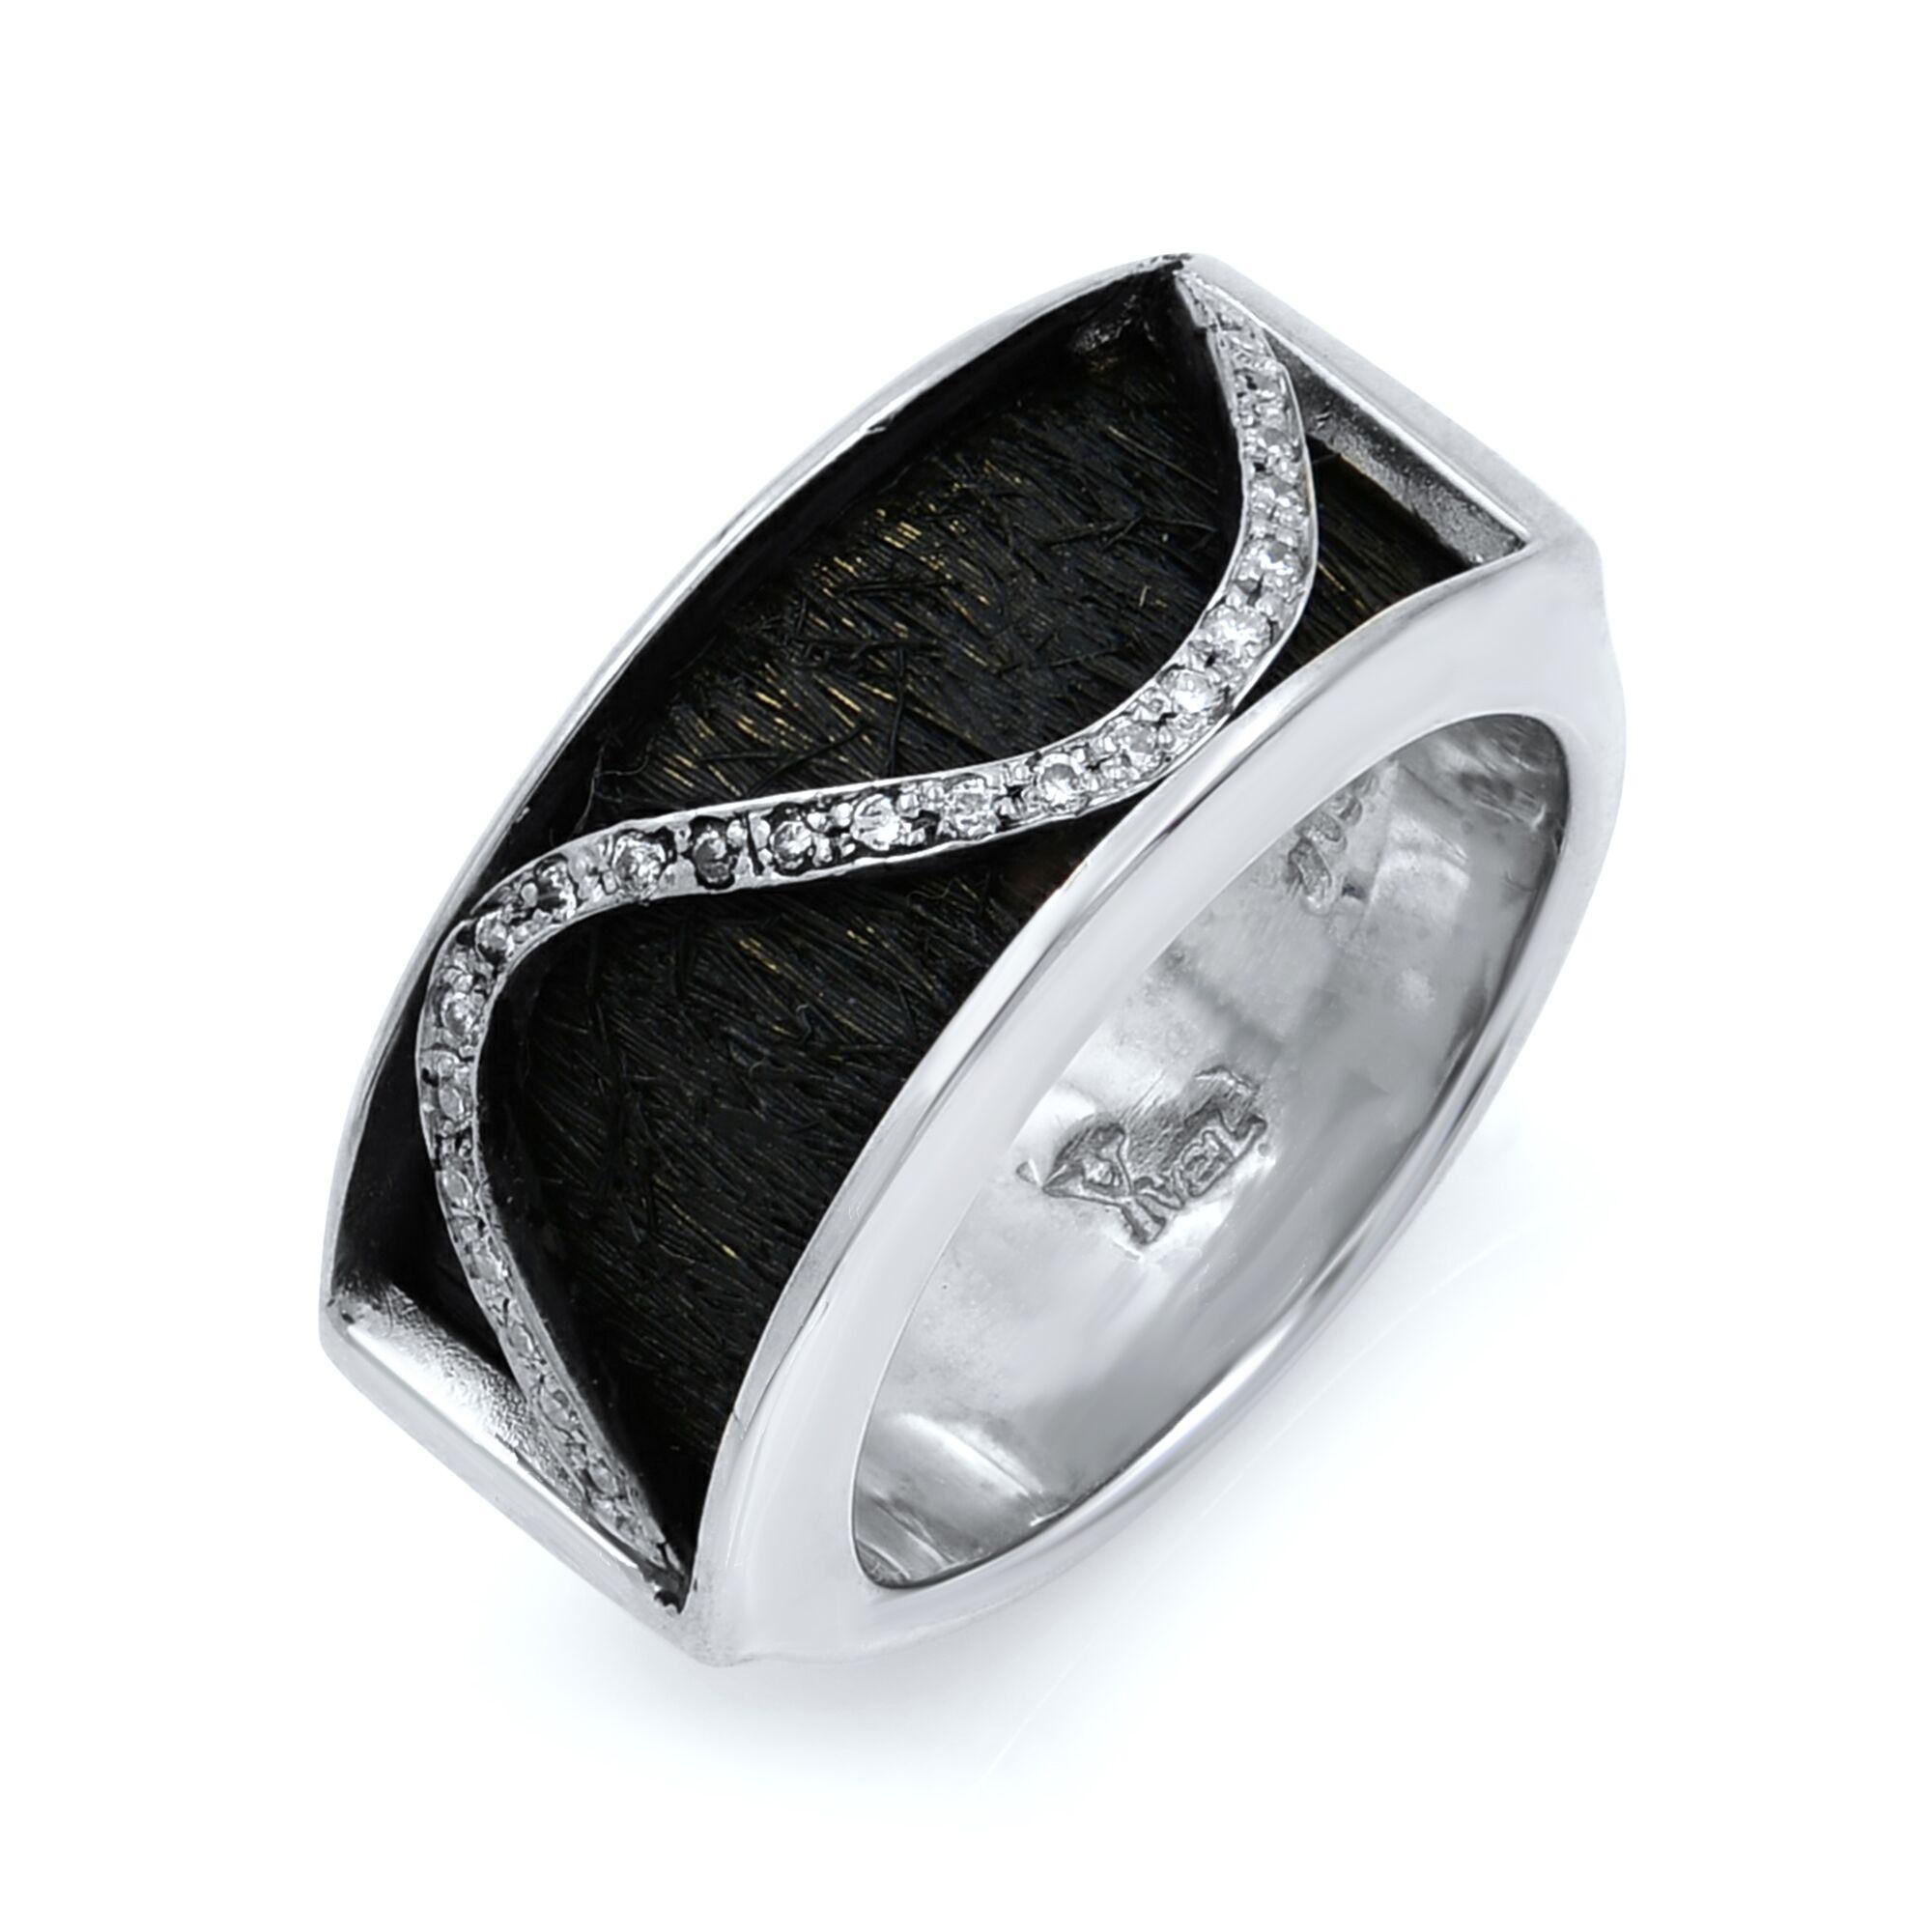 Rachel Koen Round Cut Diamond Bangle Ring and Earring Set 18K White Gold 0.60ctw For Sale 3